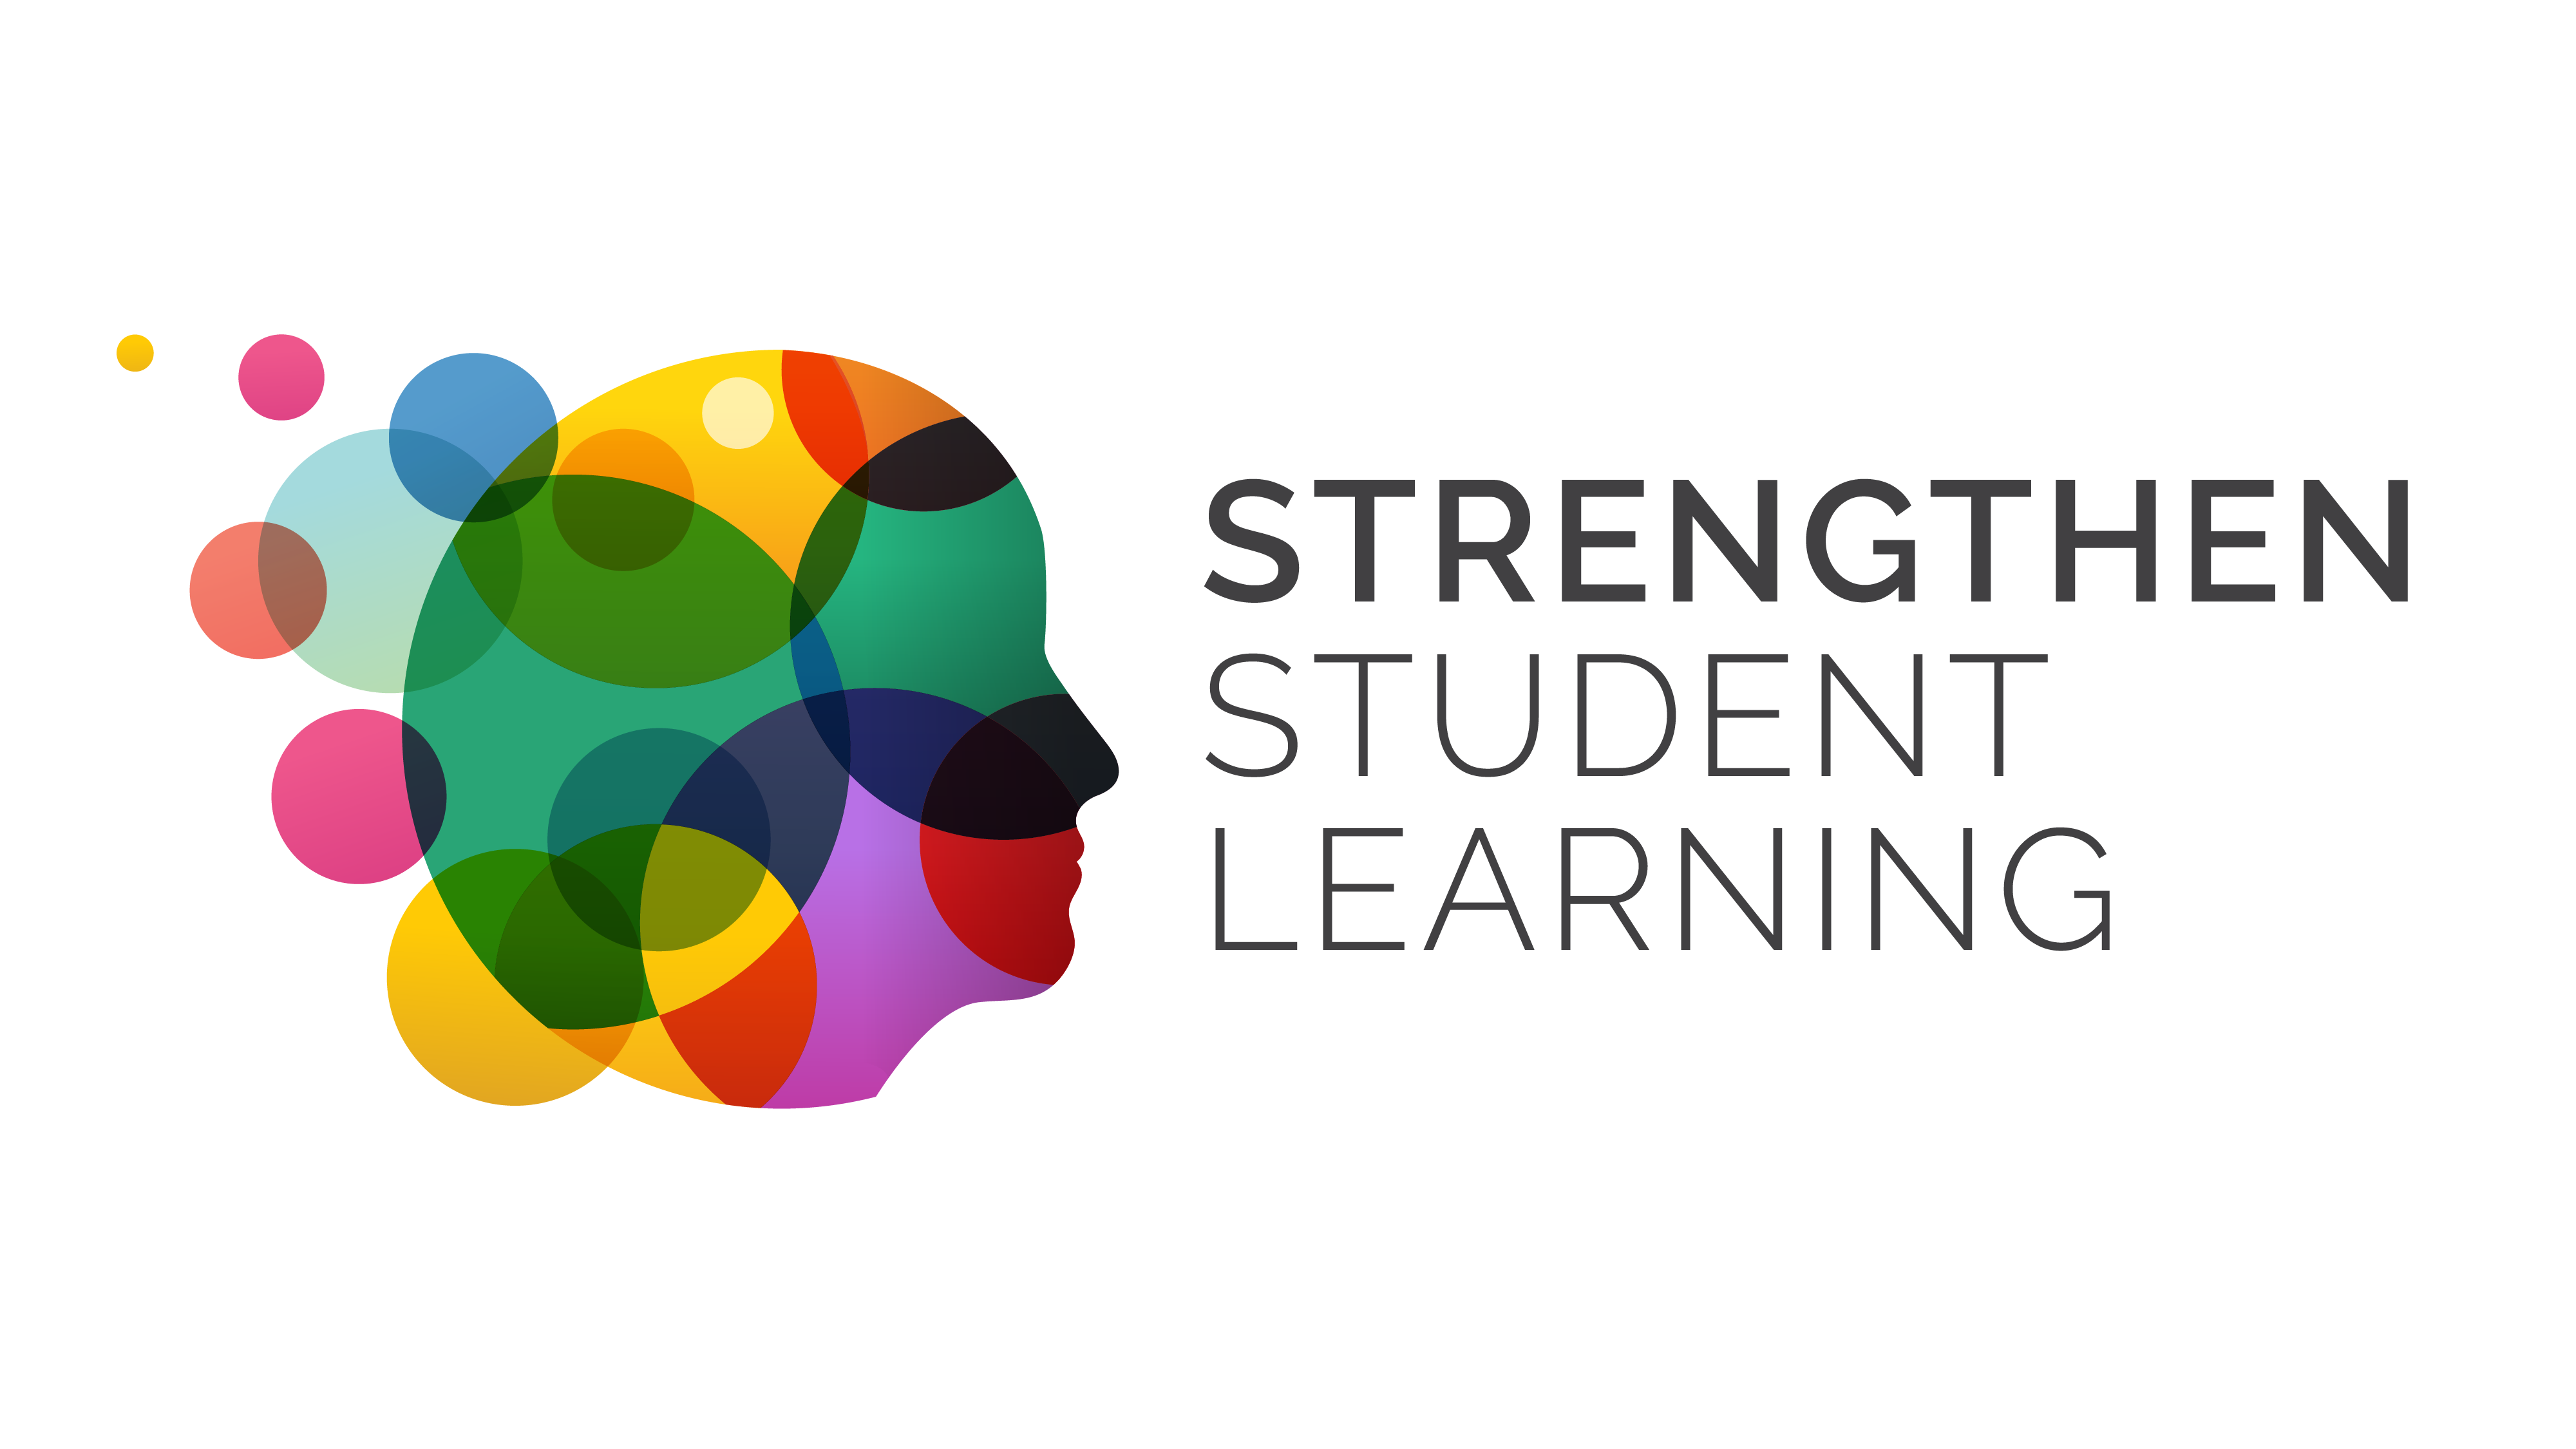 Strengthen student learning